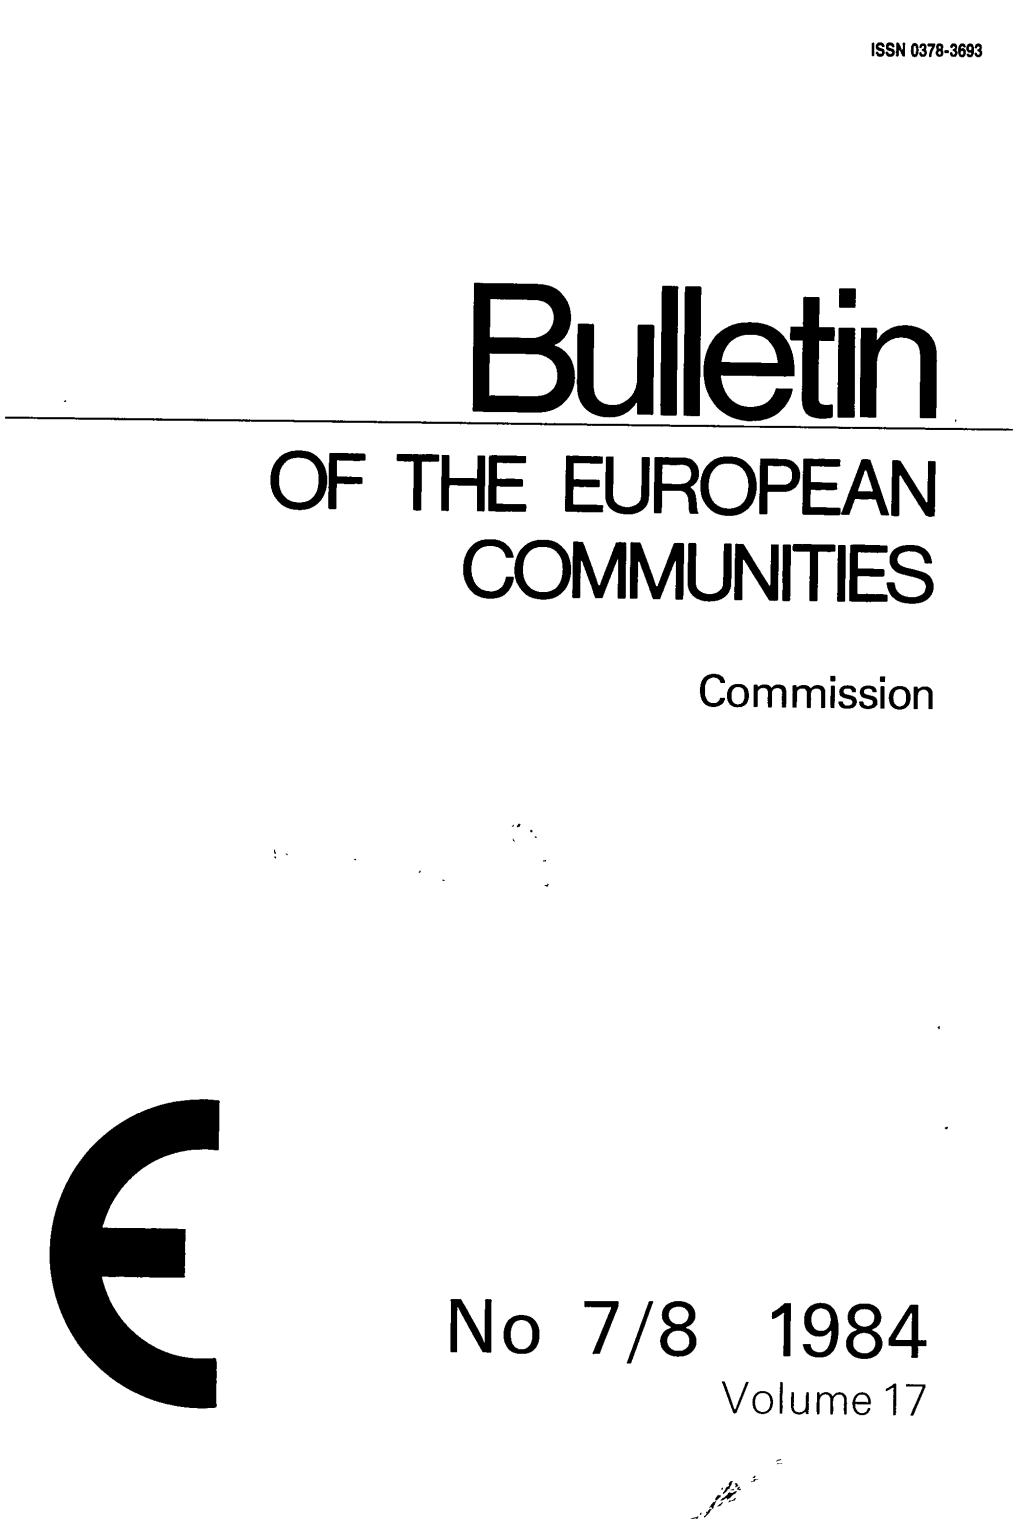 Bulletin of the EUROPEAN COMMUNITIES